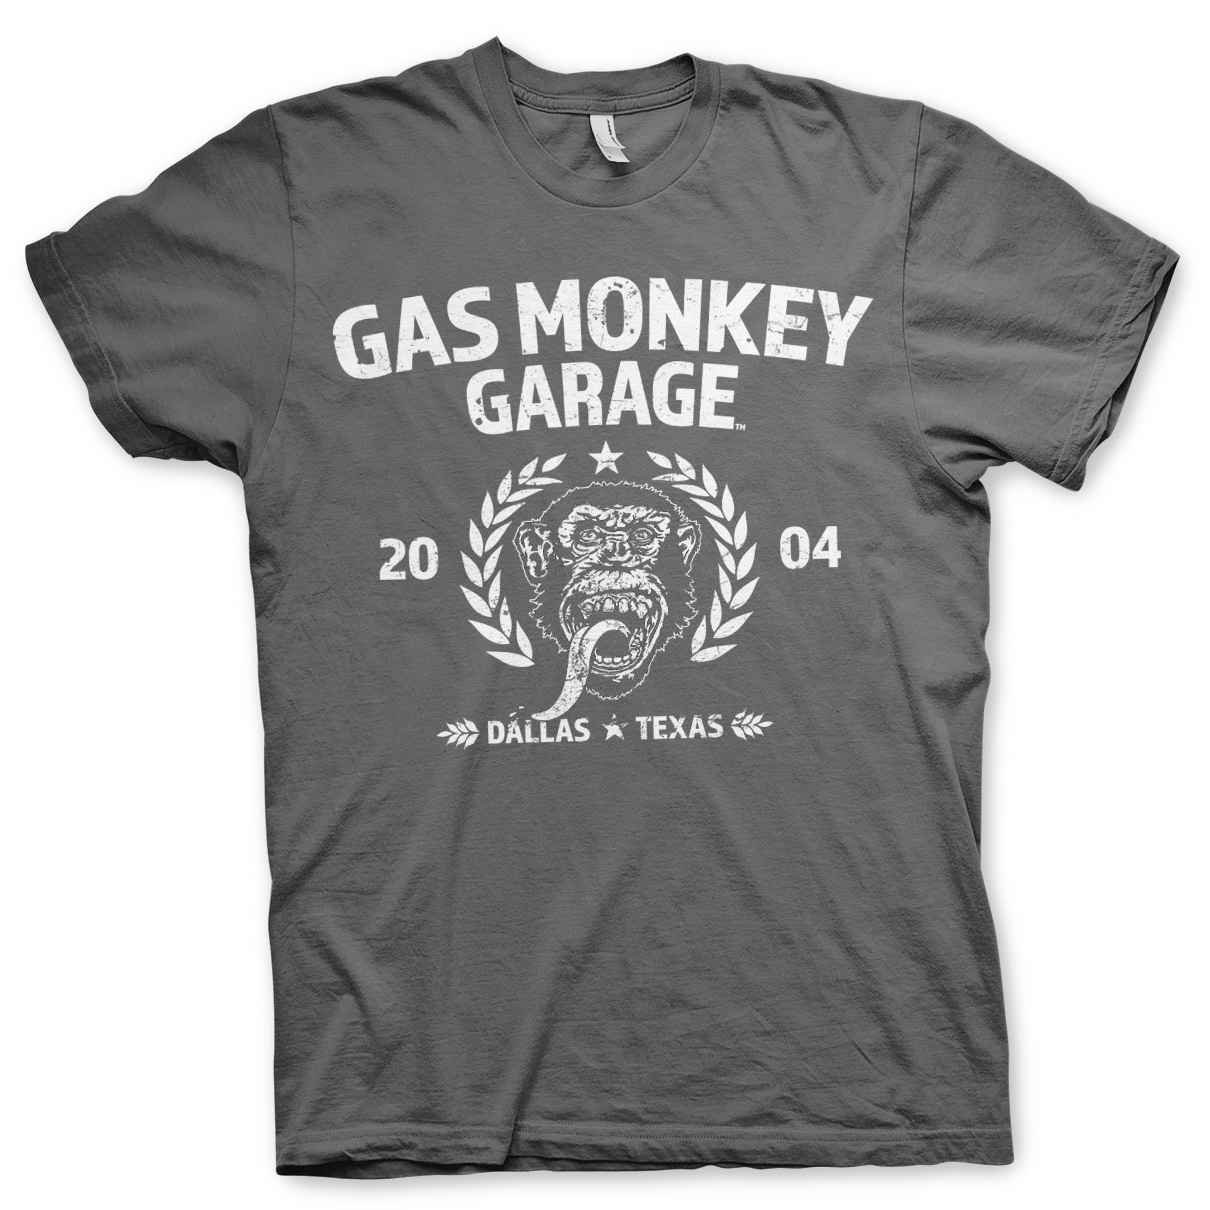 Triko Gas Monkey Garage Emblem - šedé, S